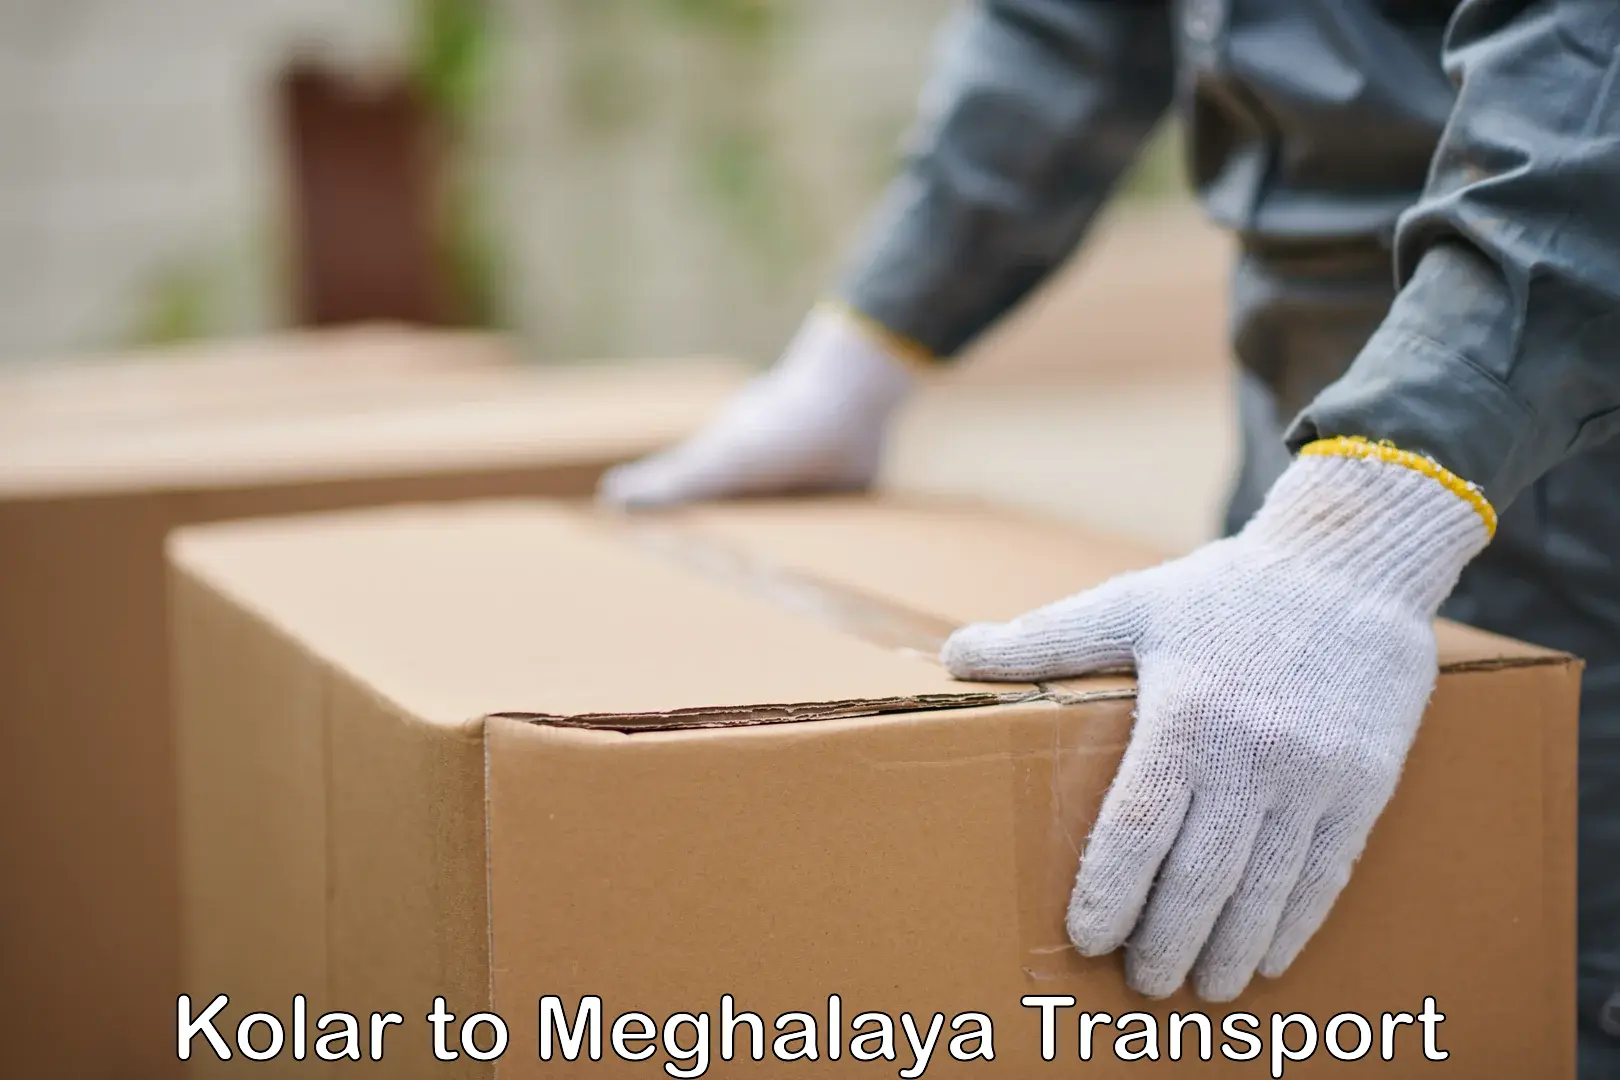 Container transport service Kolar to Meghalaya